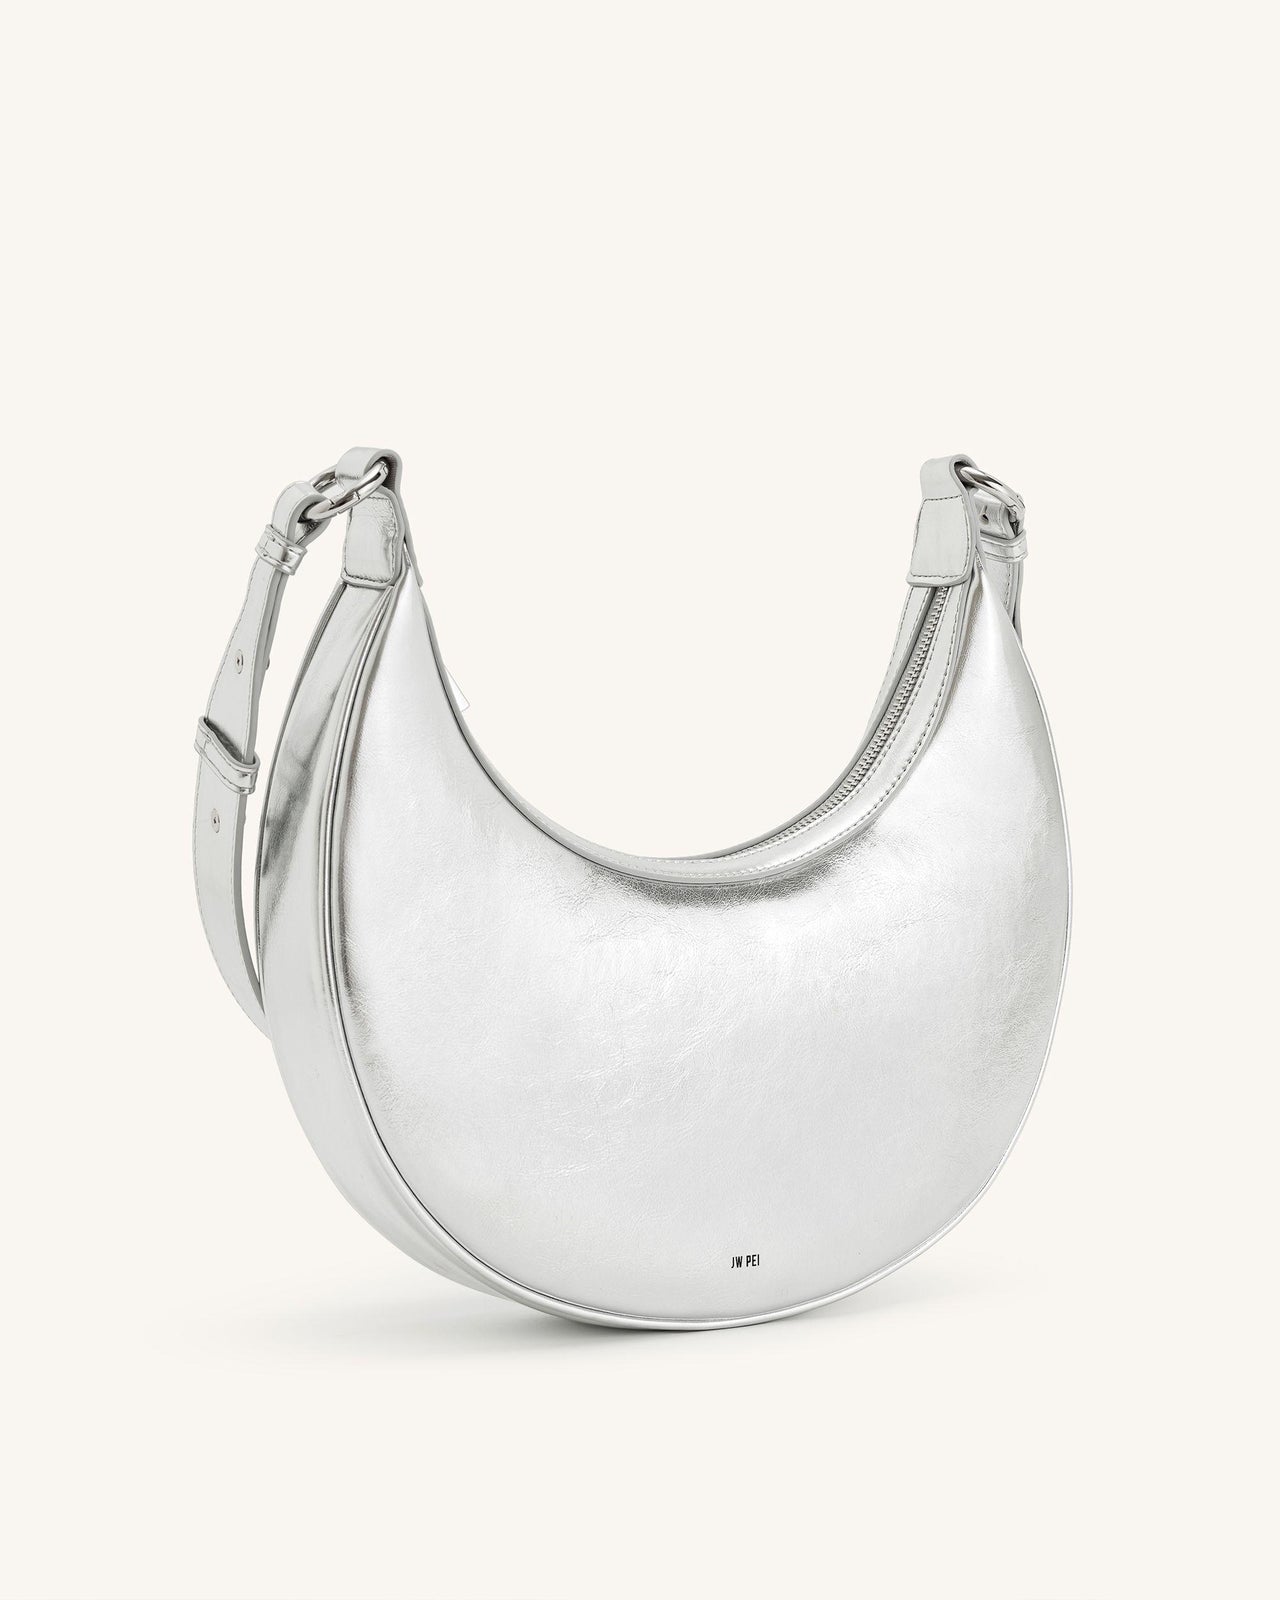 JW Pei Eva shoulder Bag White - $27 - From Daiane